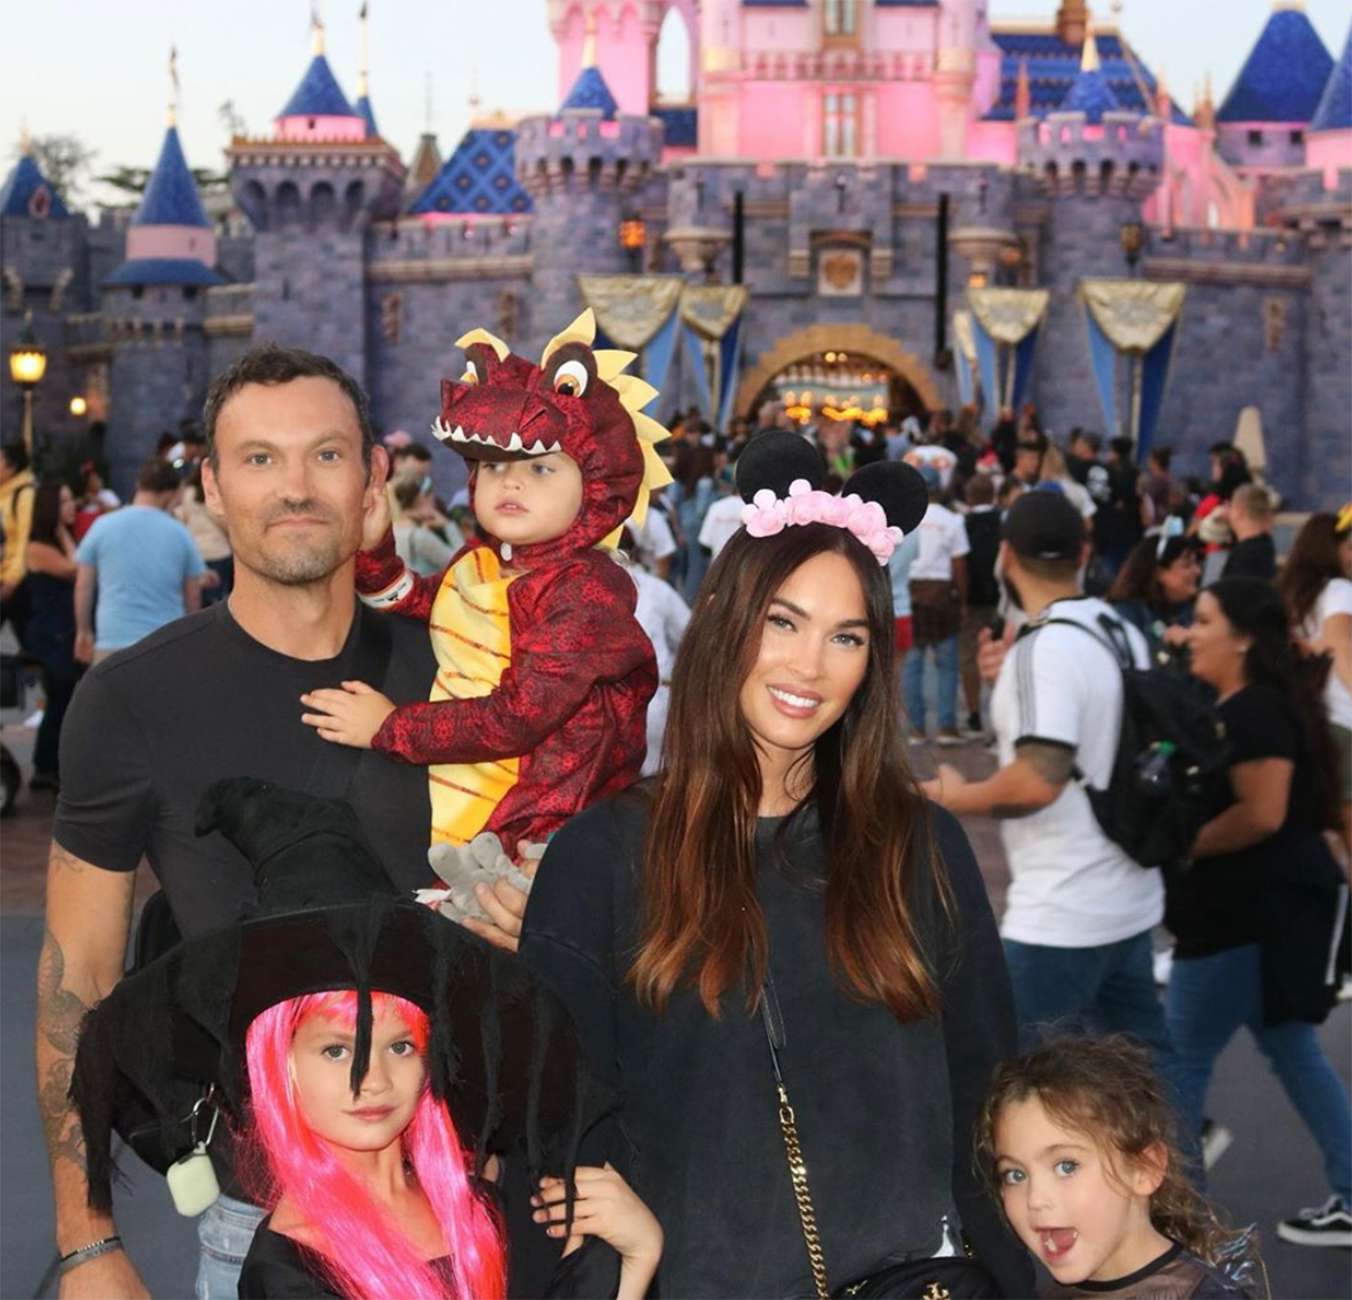 Megan Fox and family at Disneyland